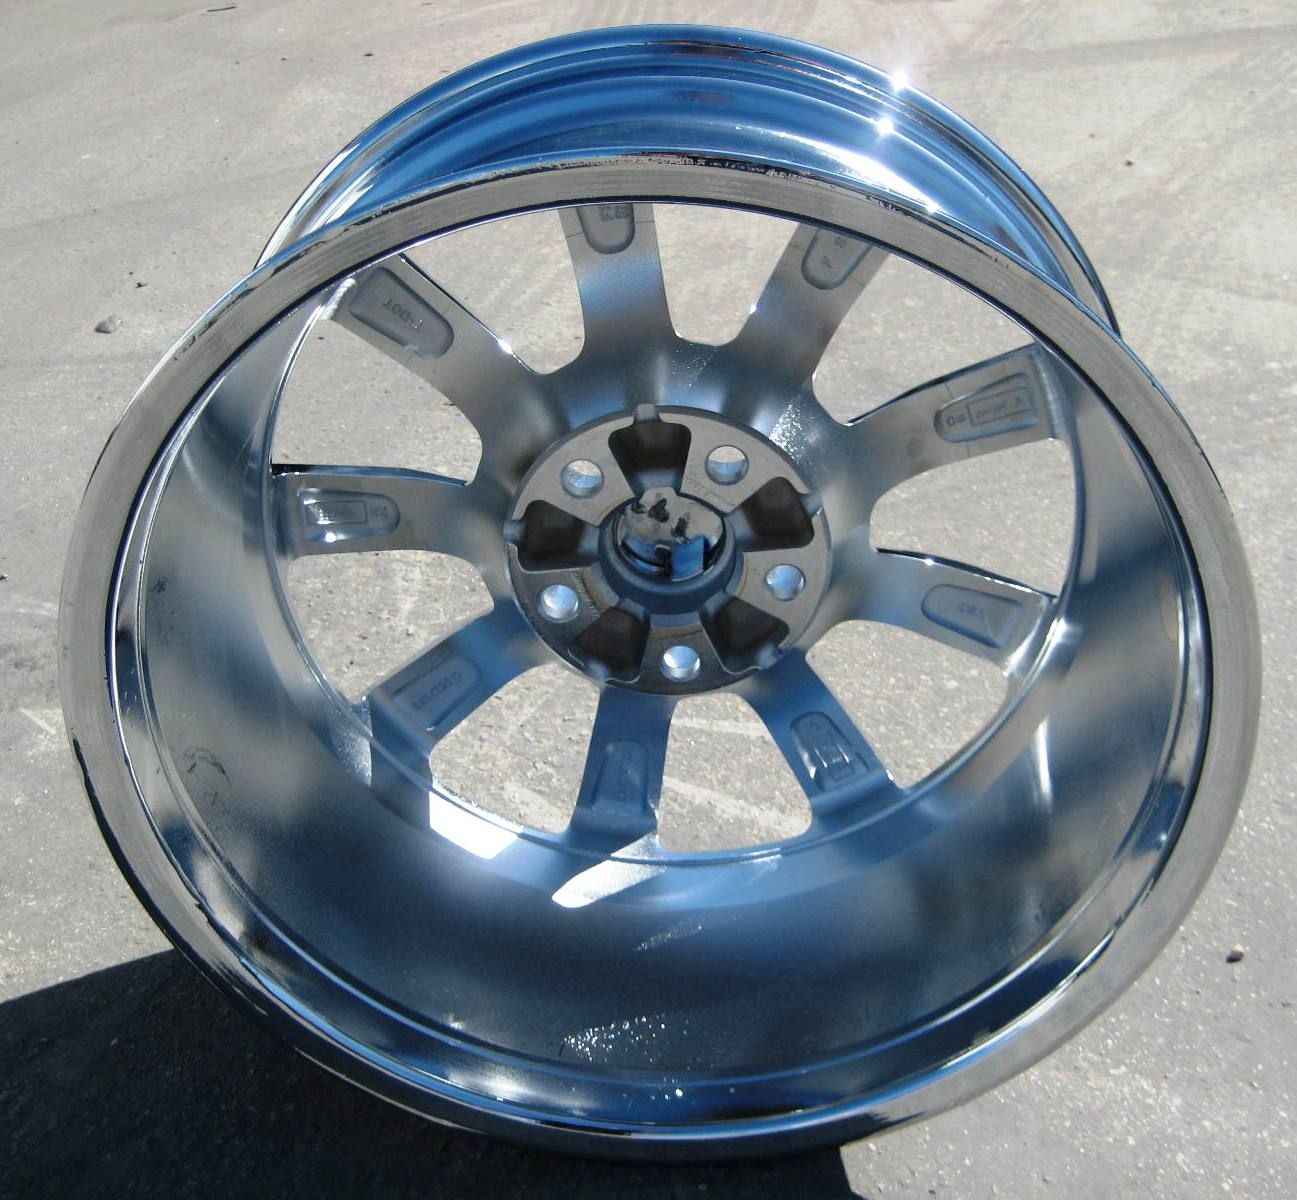 18 Factory Cadillac GM cts Chrome Wheel Rim 2008 11 1 Single